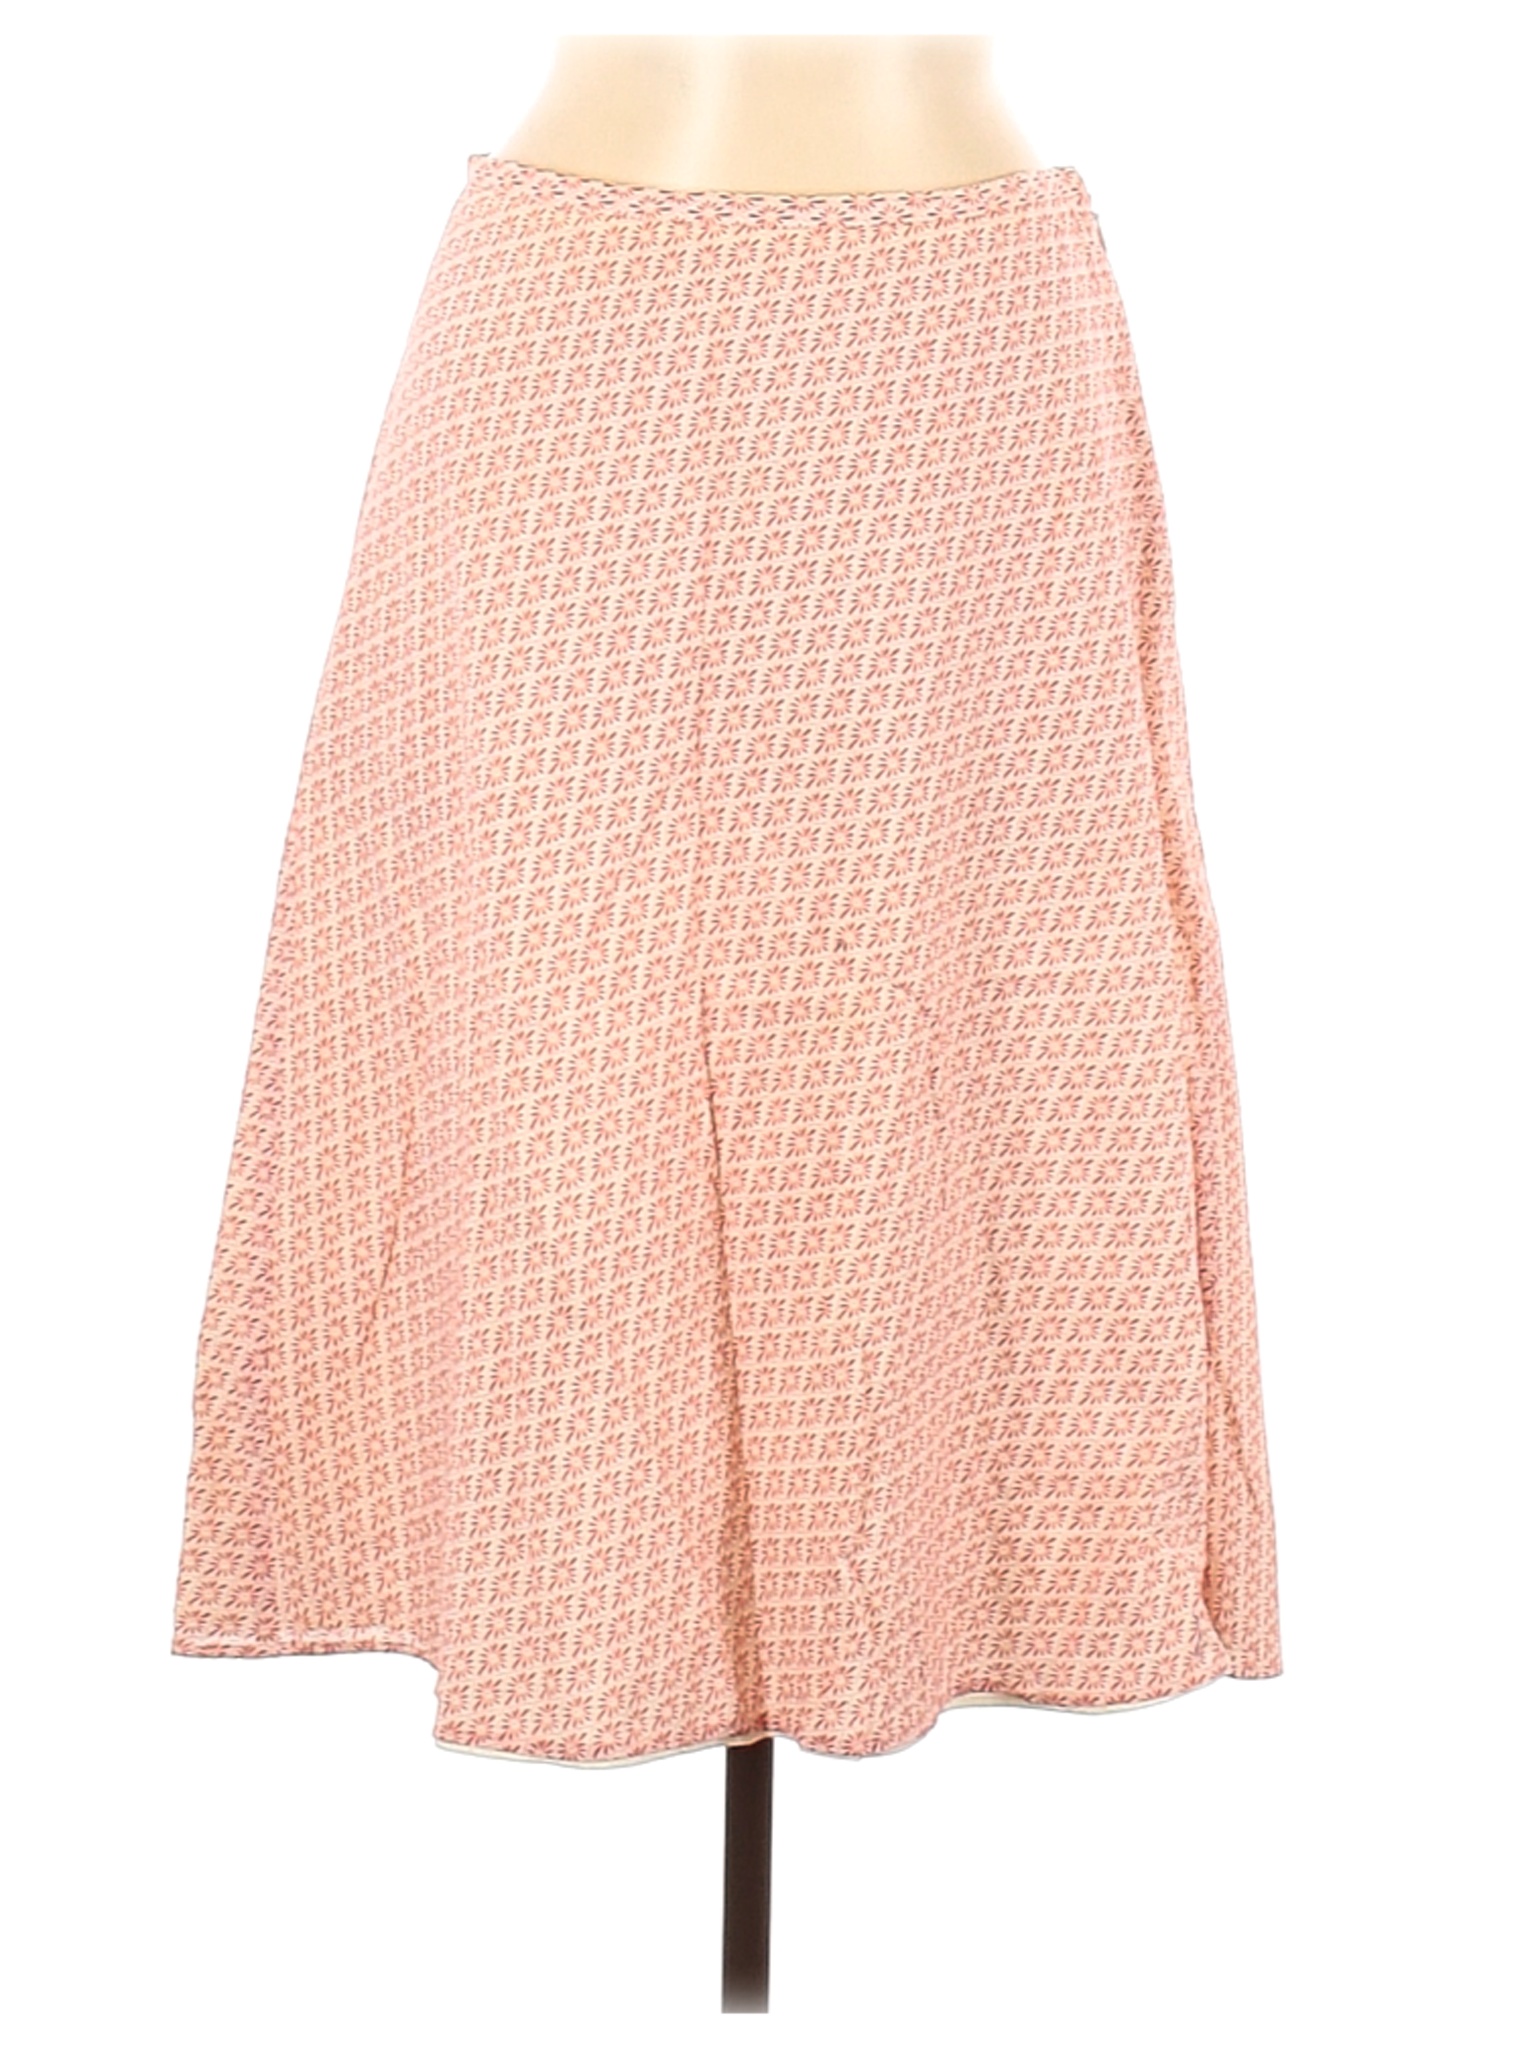 J.Crew Women Pink Casual Skirt 6 | eBay